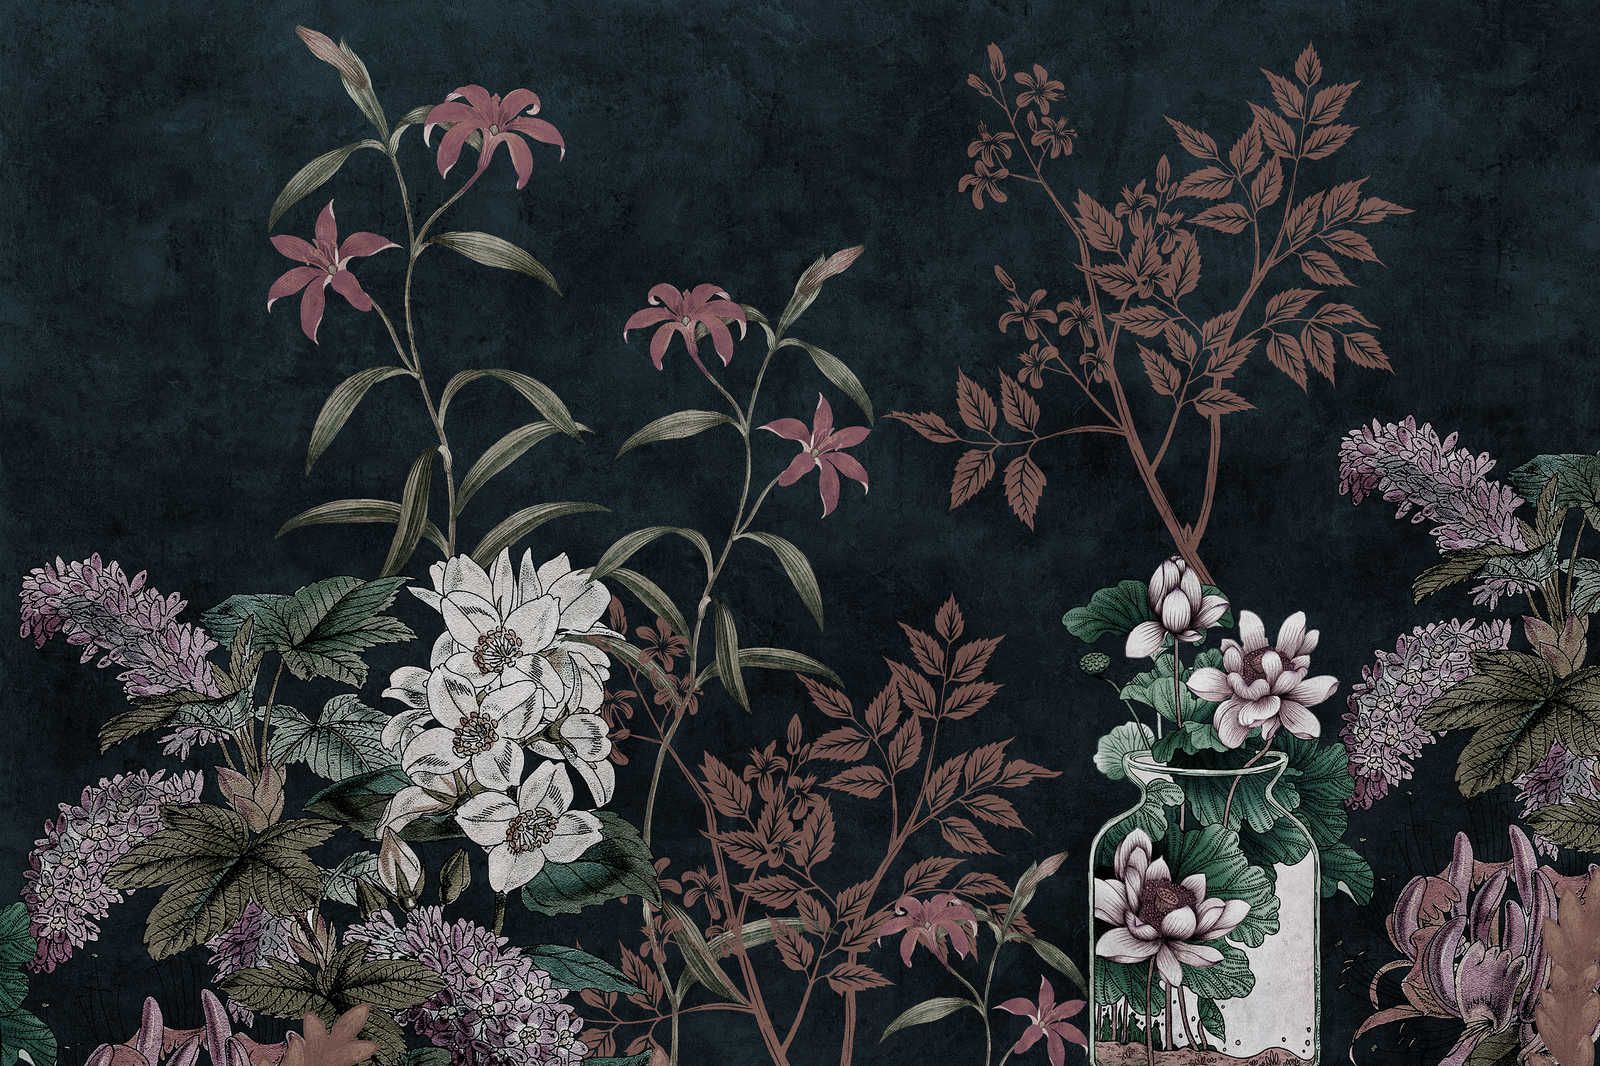             Dark Room 2 - Black Canvas Painting Botanical Pattern Pink - 0.90 m x 0.60 m
        